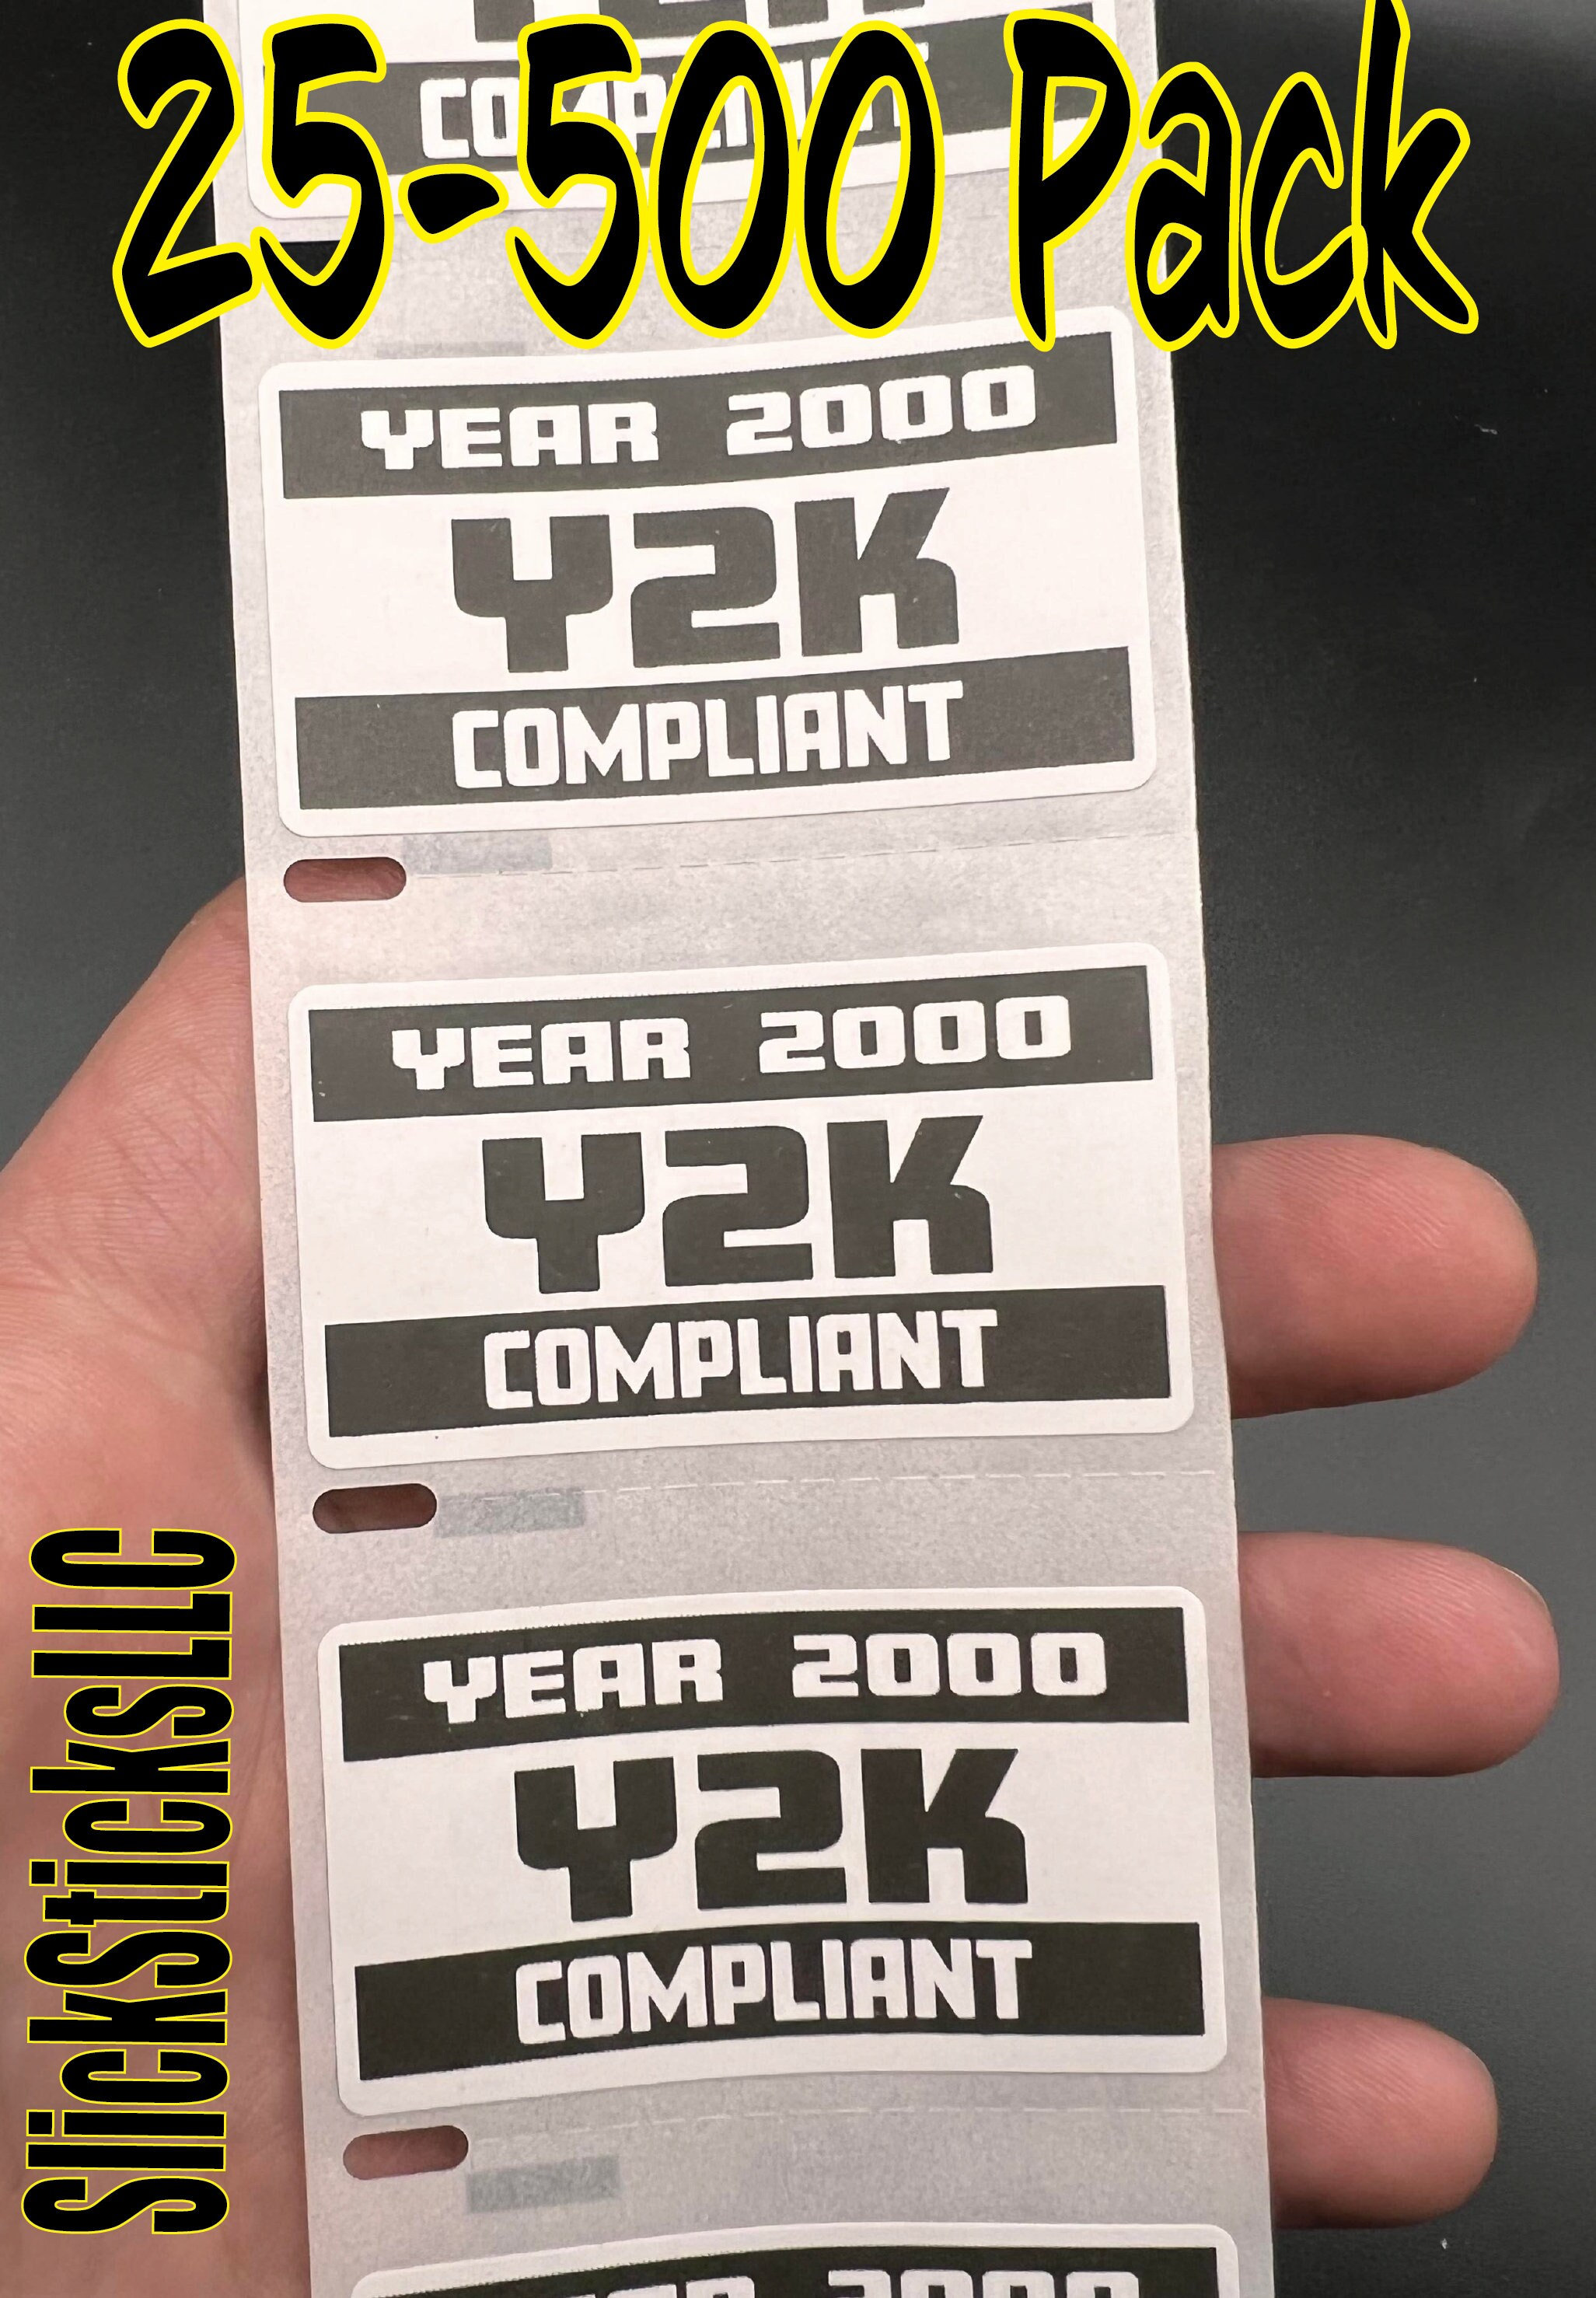 SHOCKER symbol 25-500 Pack Stickers Gag prank sticker decal meme